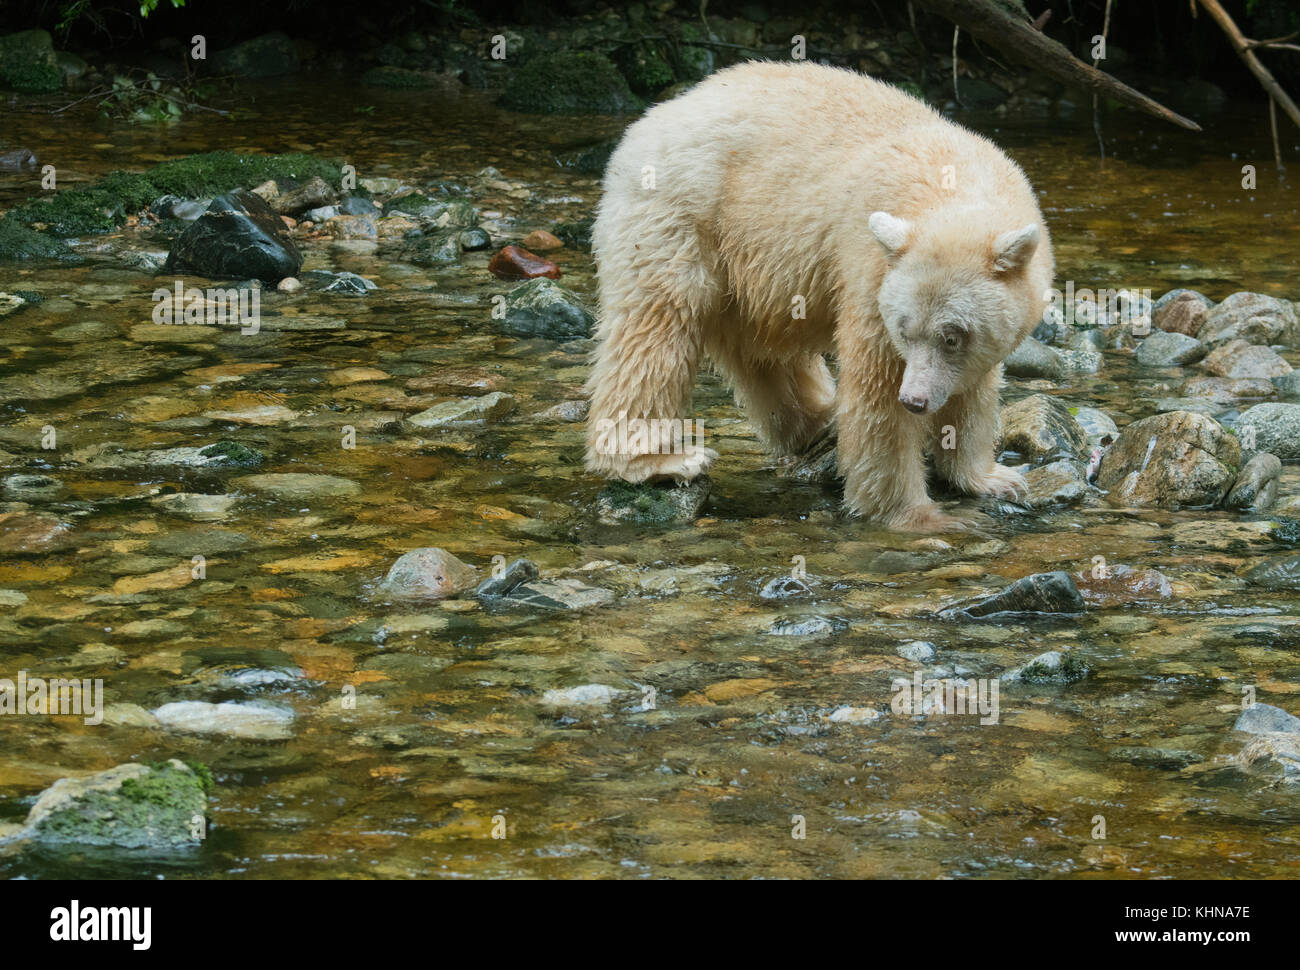 Kermode o 'espíritu' oso (Ursus americanus kermodei), blanco Forma de oso negro americano, Great Bear rainforest, BC, Canadá Foto de stock